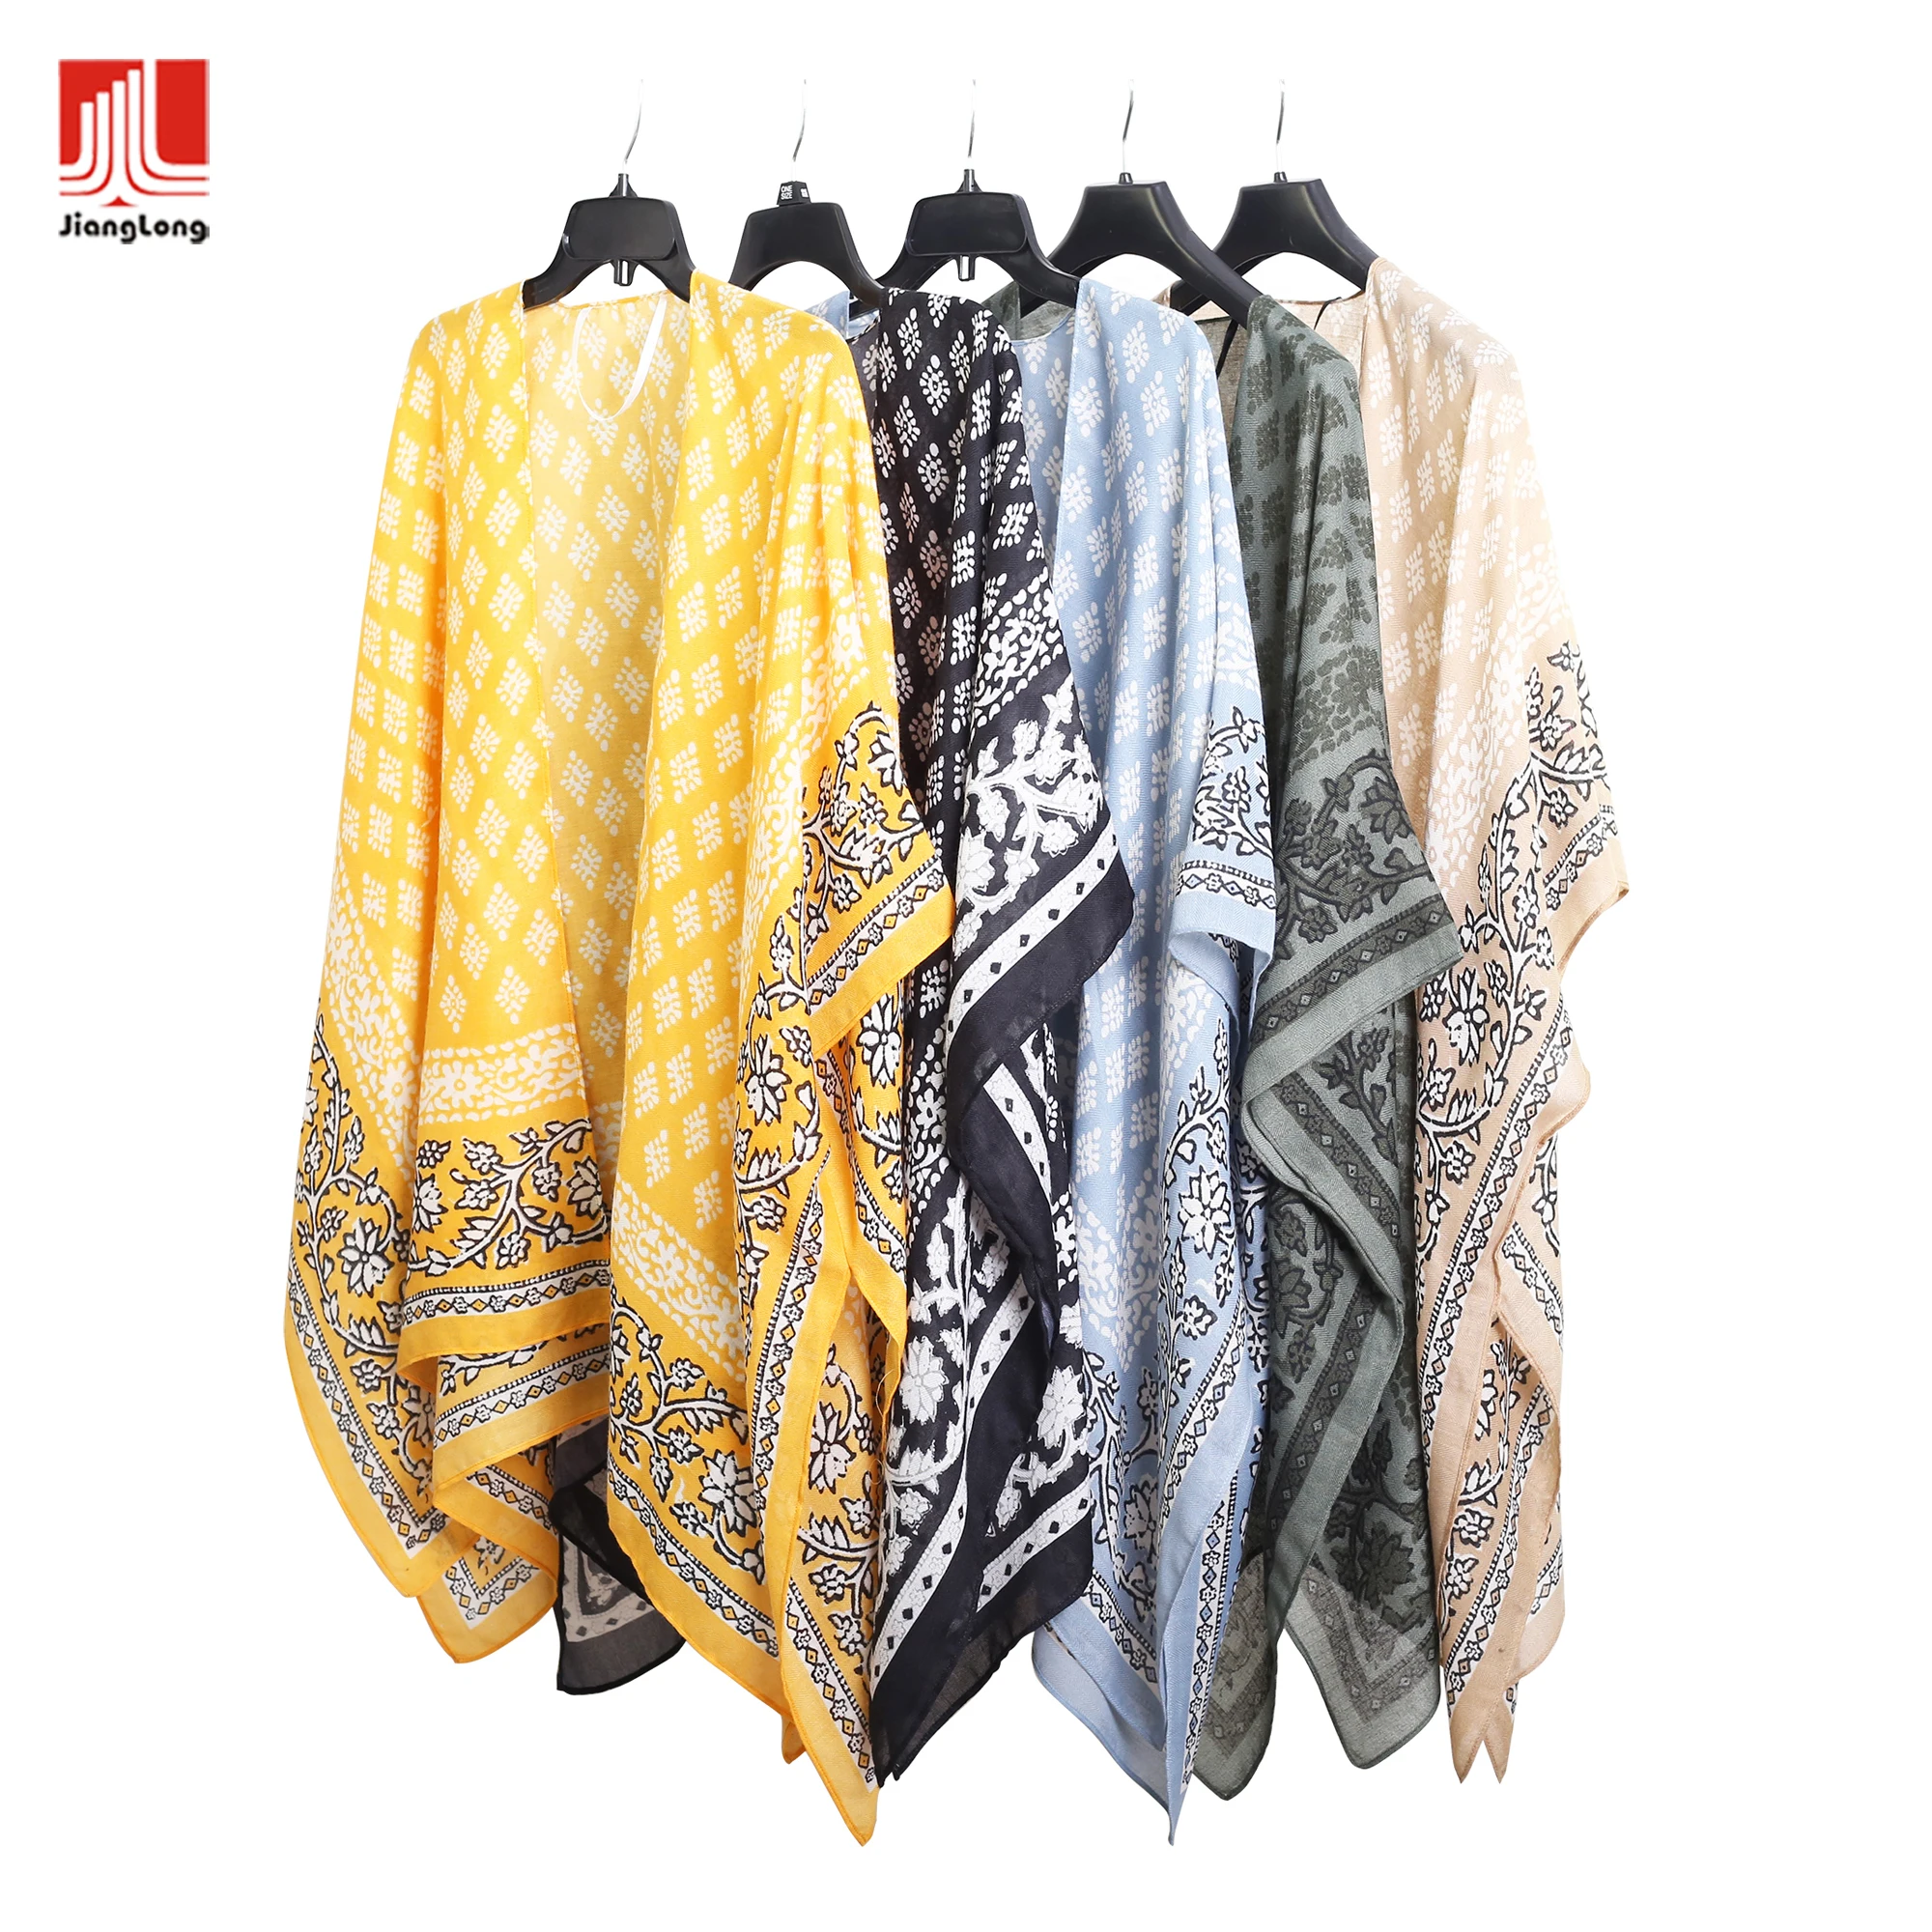 New OEM lightweight recycle poly vintage floral border print textures casual ruana beachwear boho dress summer tops kimono women